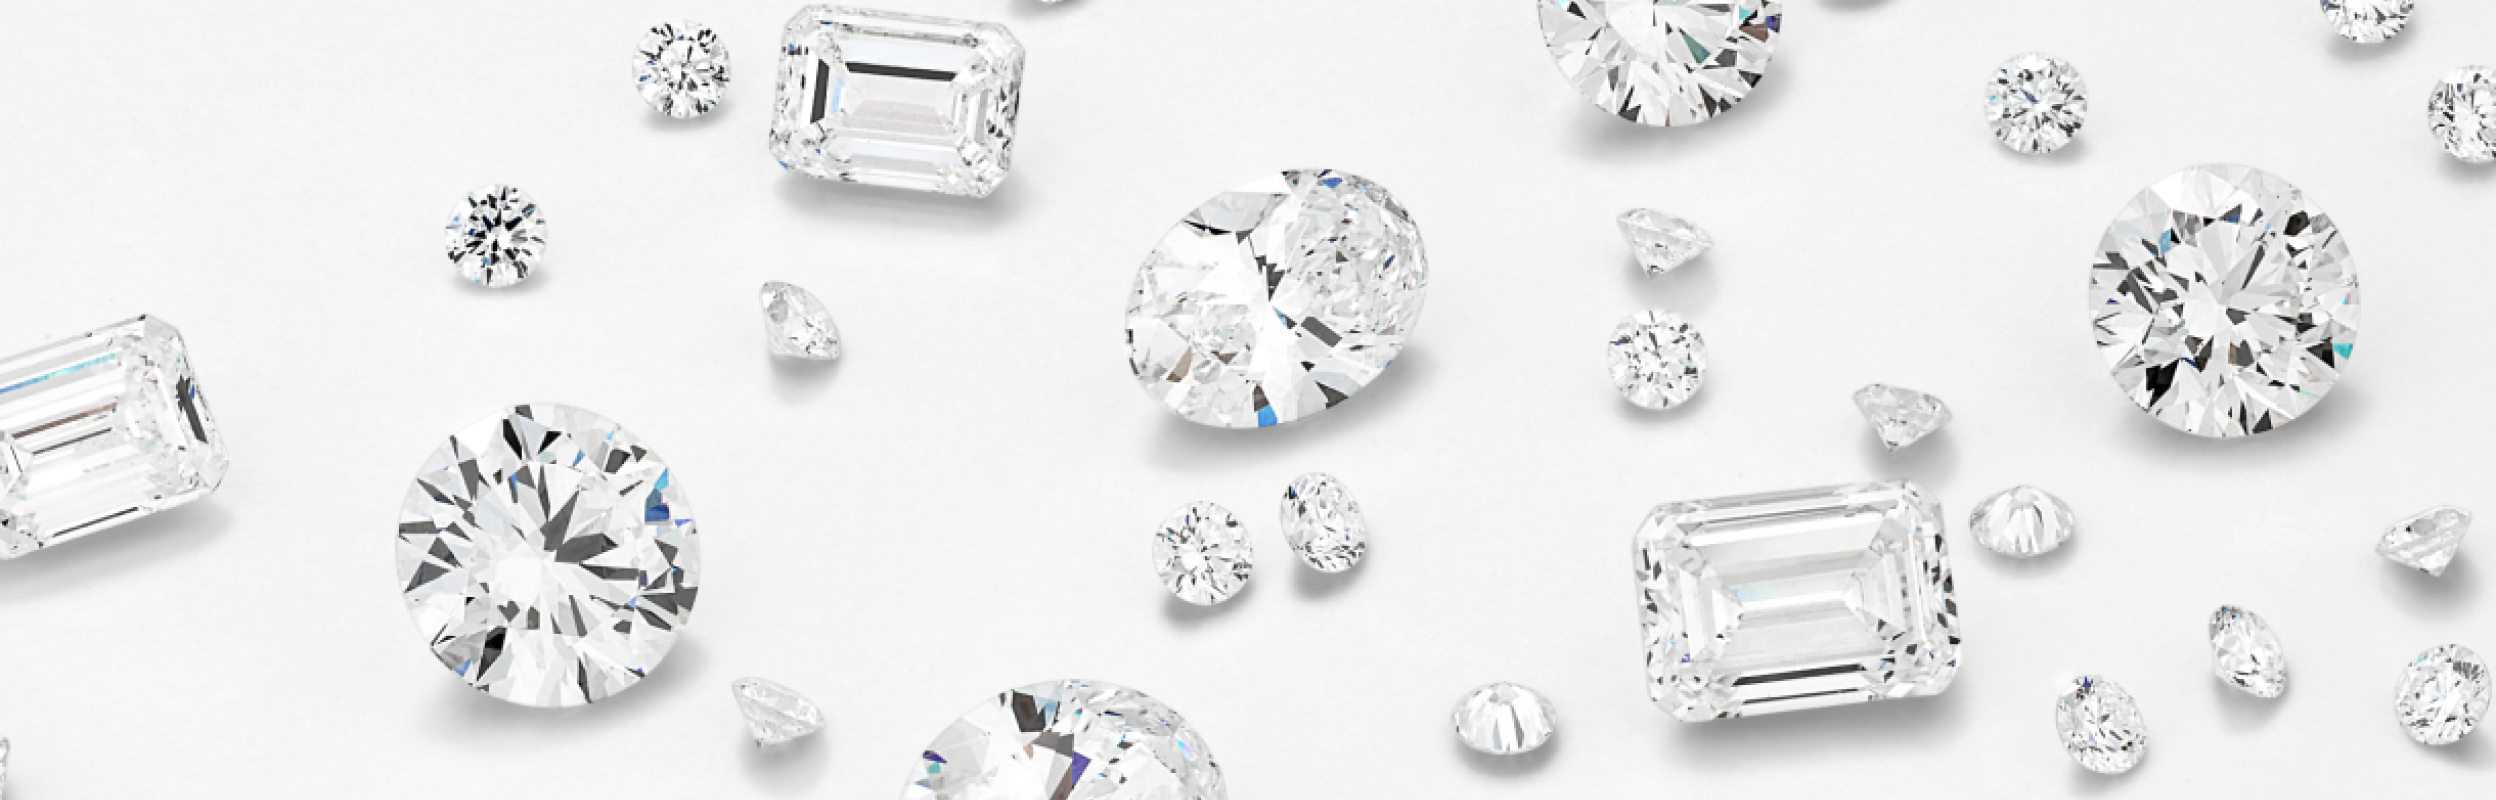 Your guide to Diamonds - Diamond Cuts